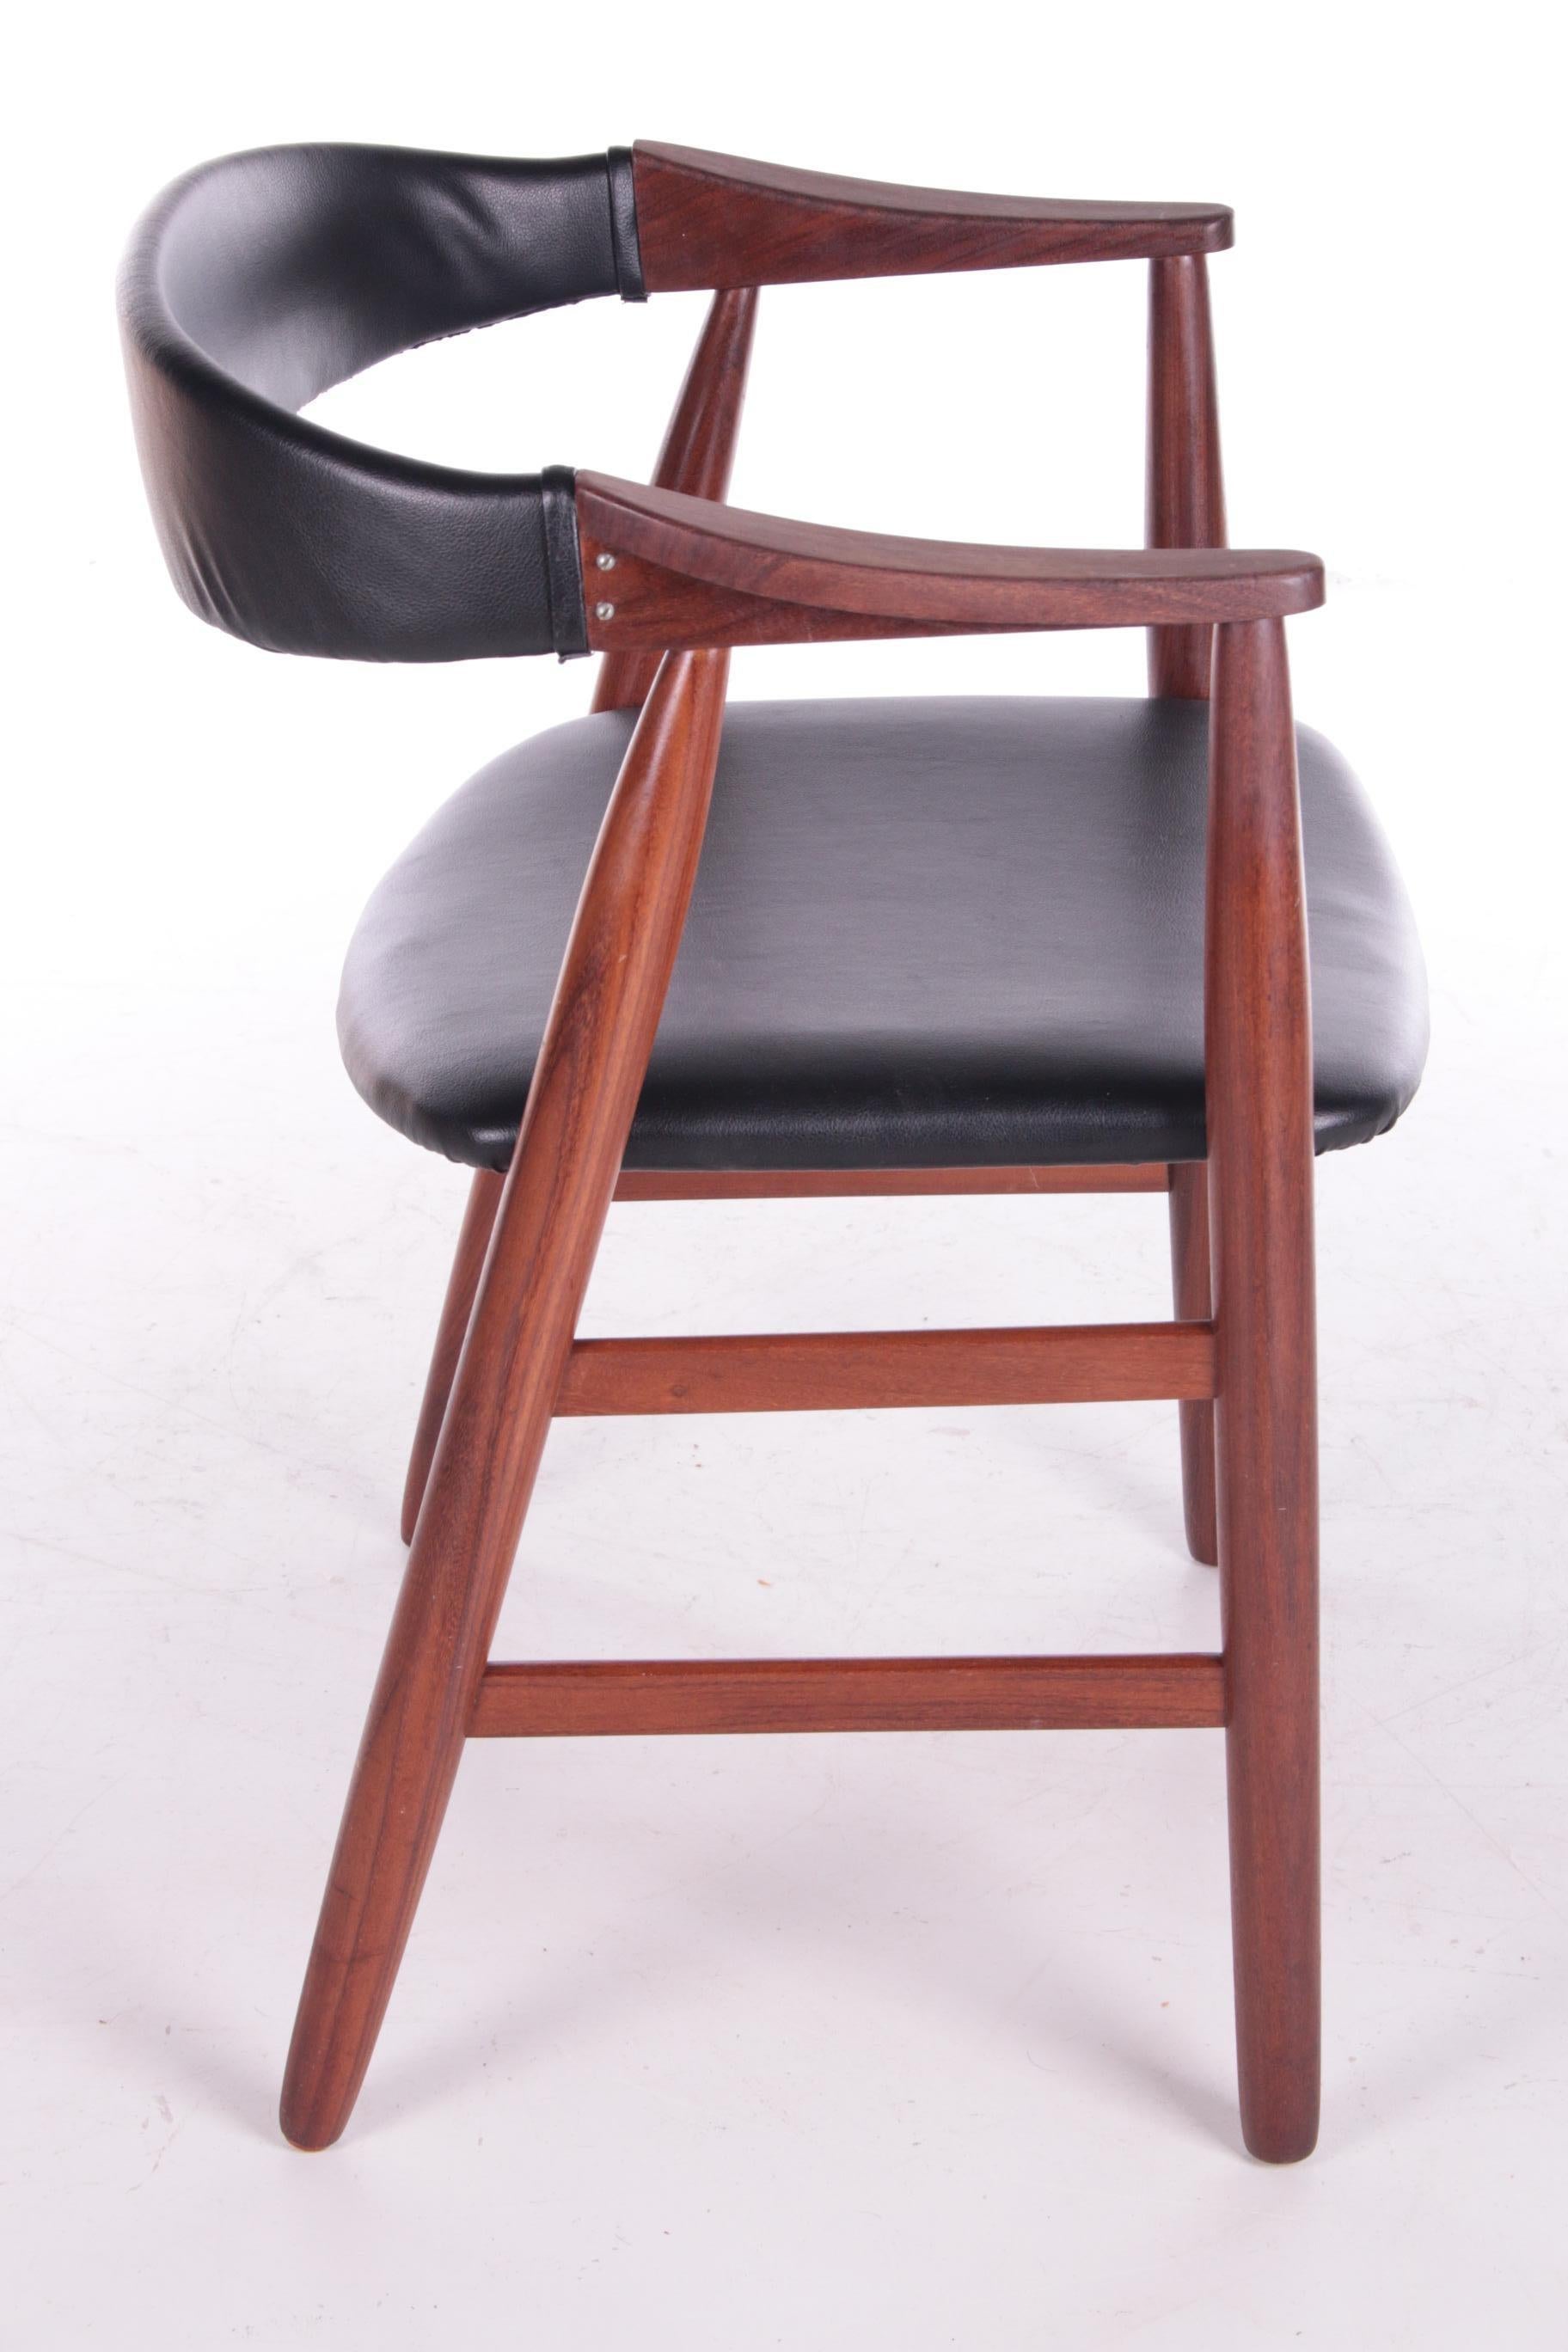 Leather Vintage Danish Design Office Chair from Farstrup, Denmark 1960